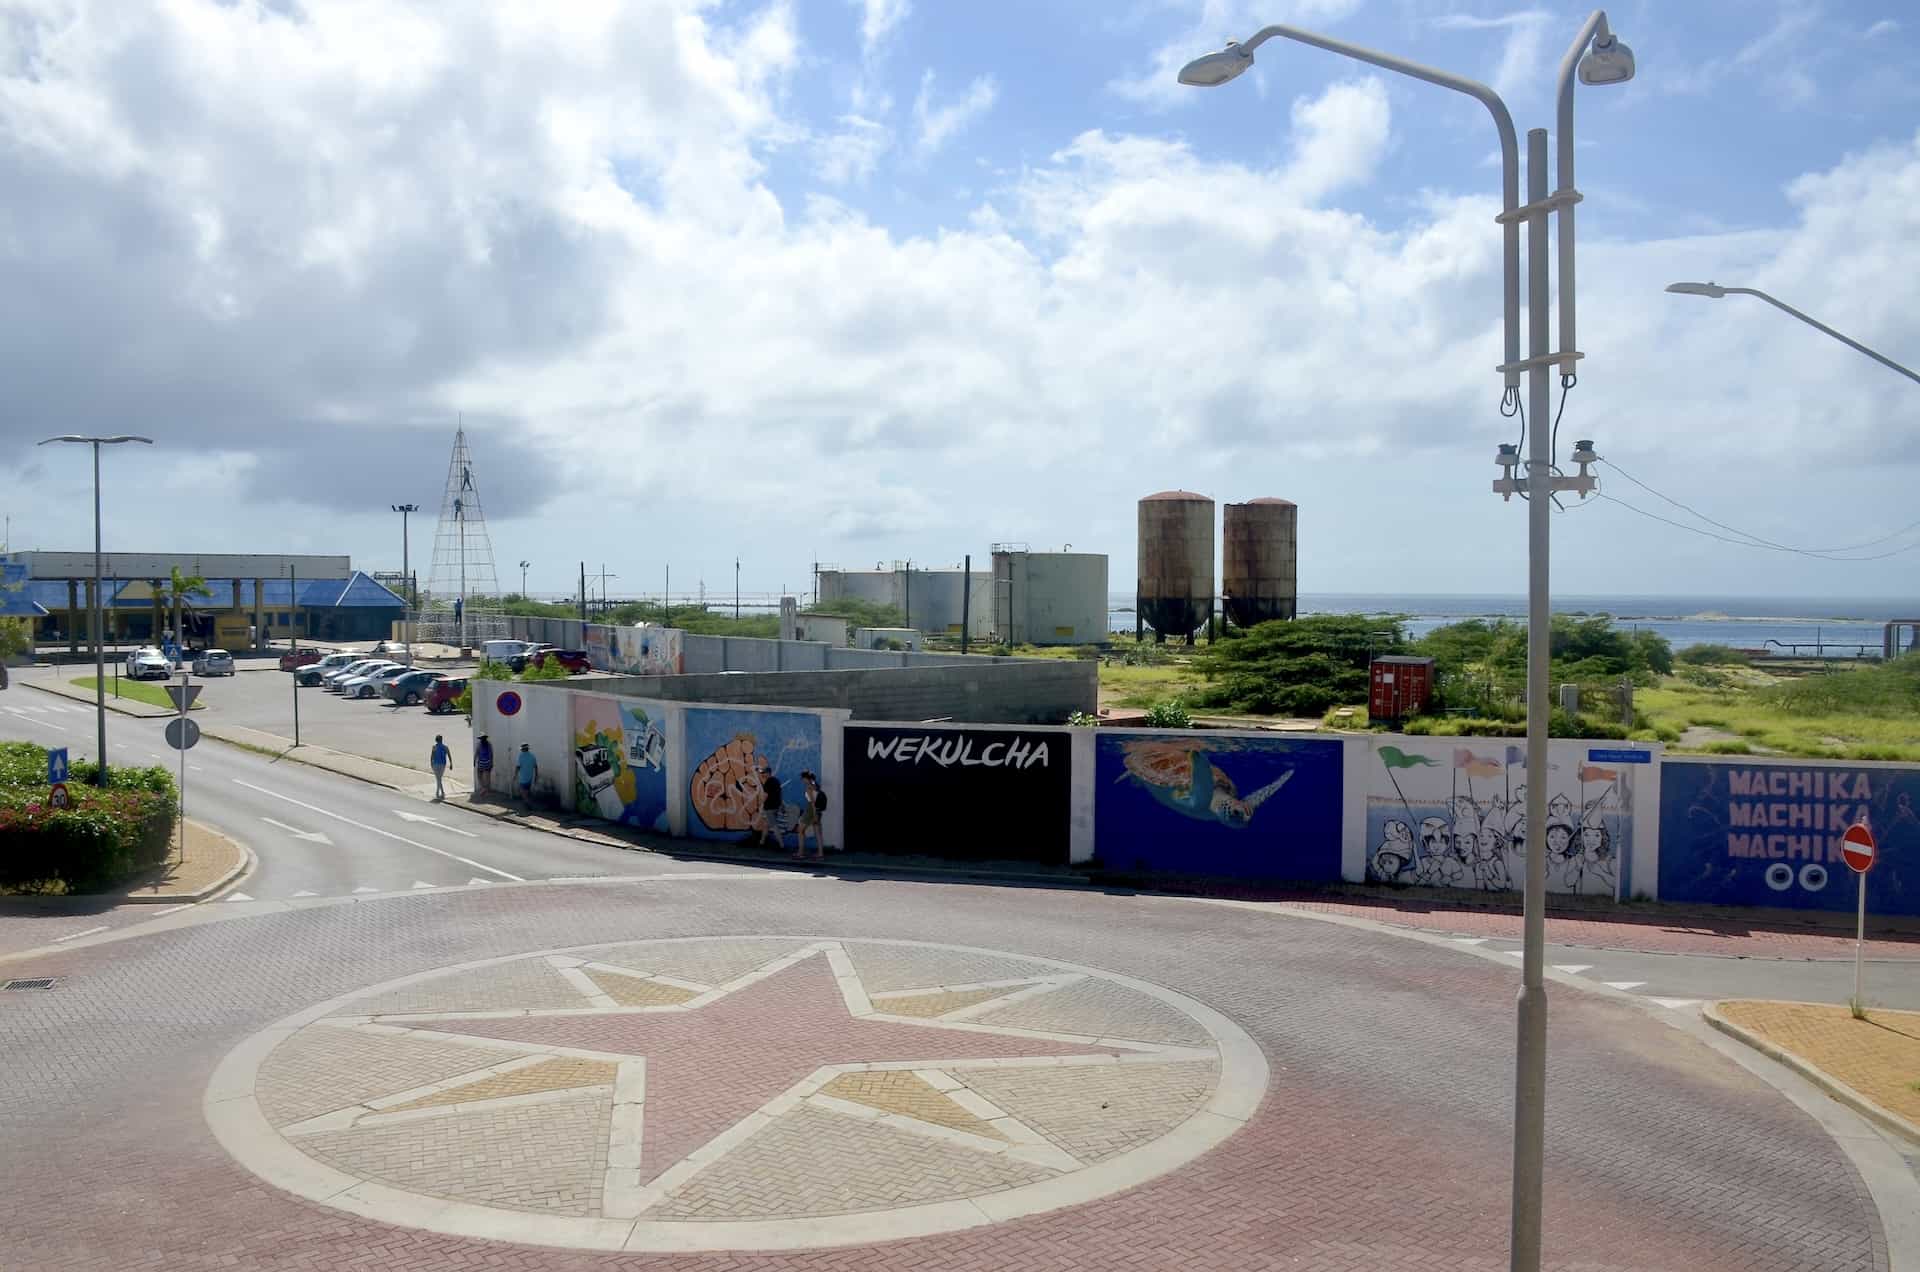 View of the Lago Refinery at the Community Museum in San Nicolas, Aruba